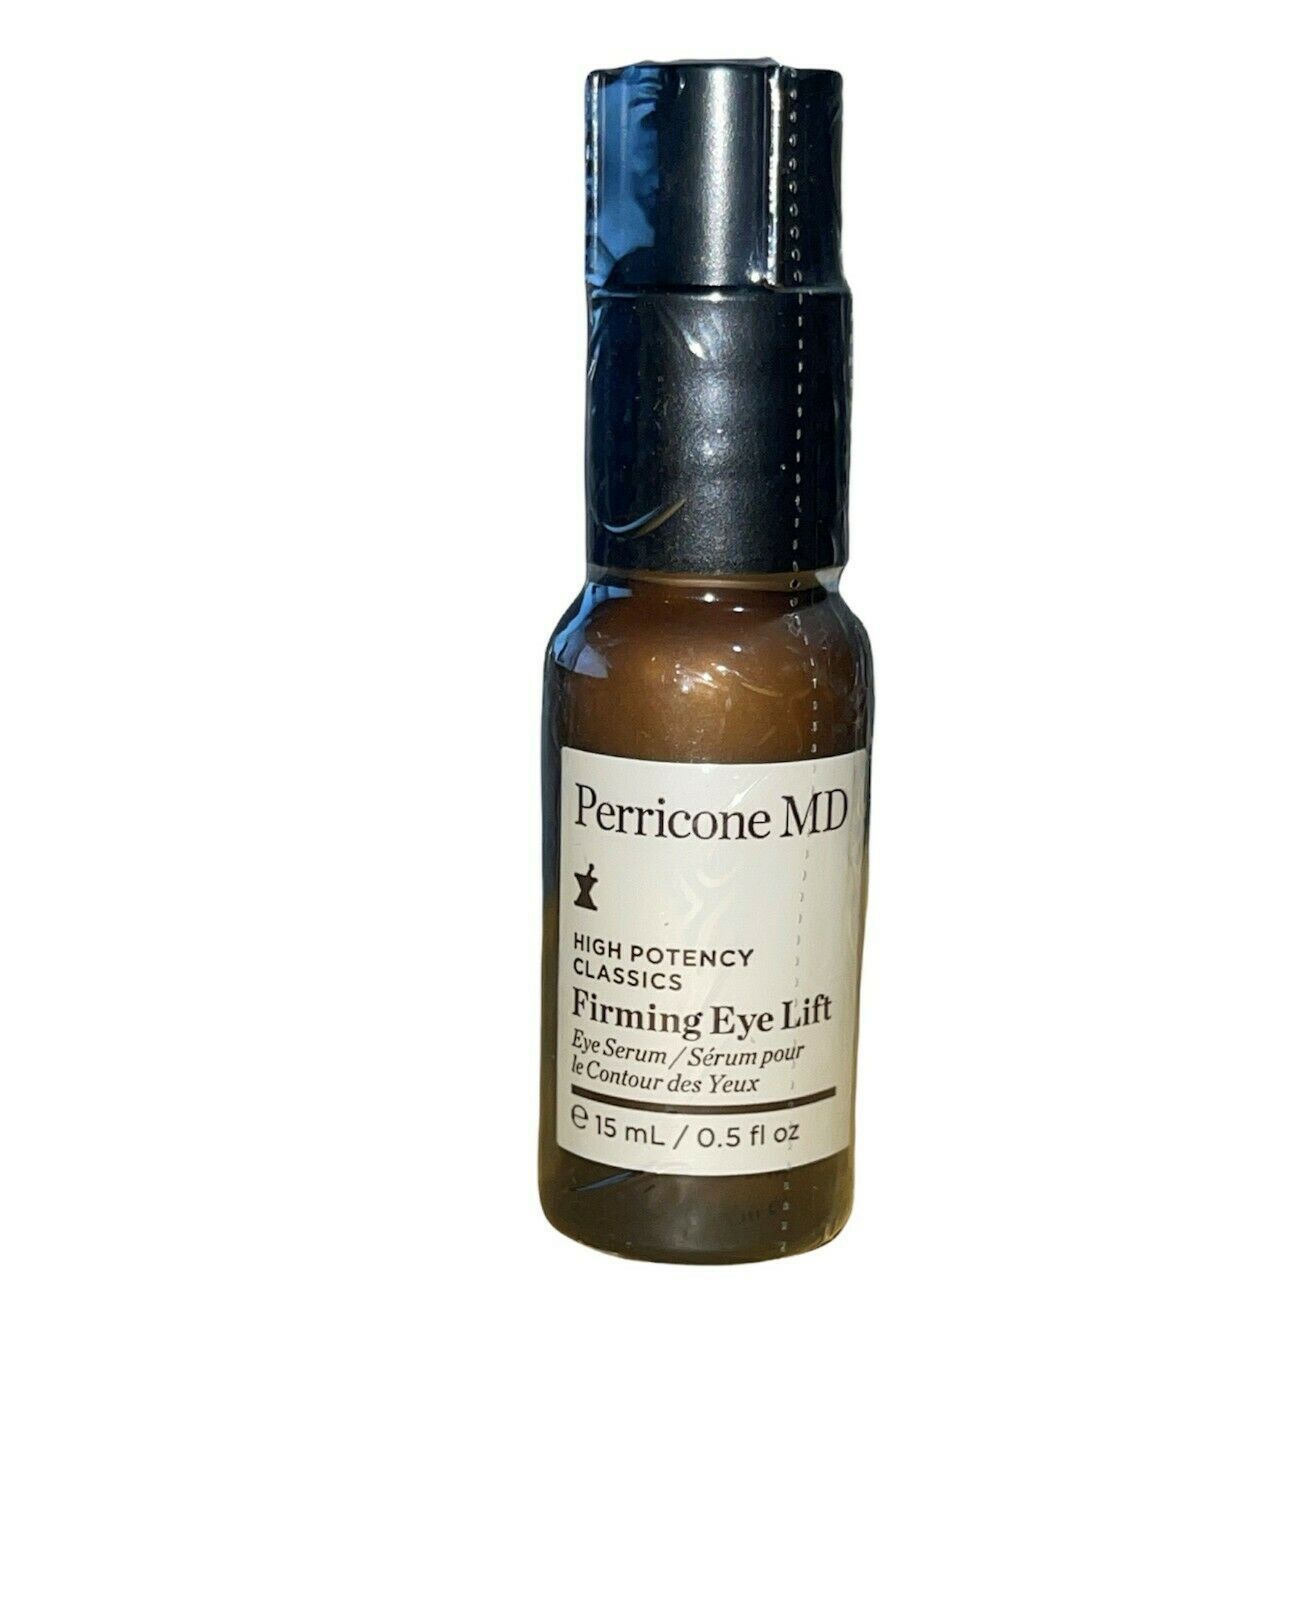 Perricone MD High Potency Classics Firming Eye Lift Serum 0.5 oz - $40.00